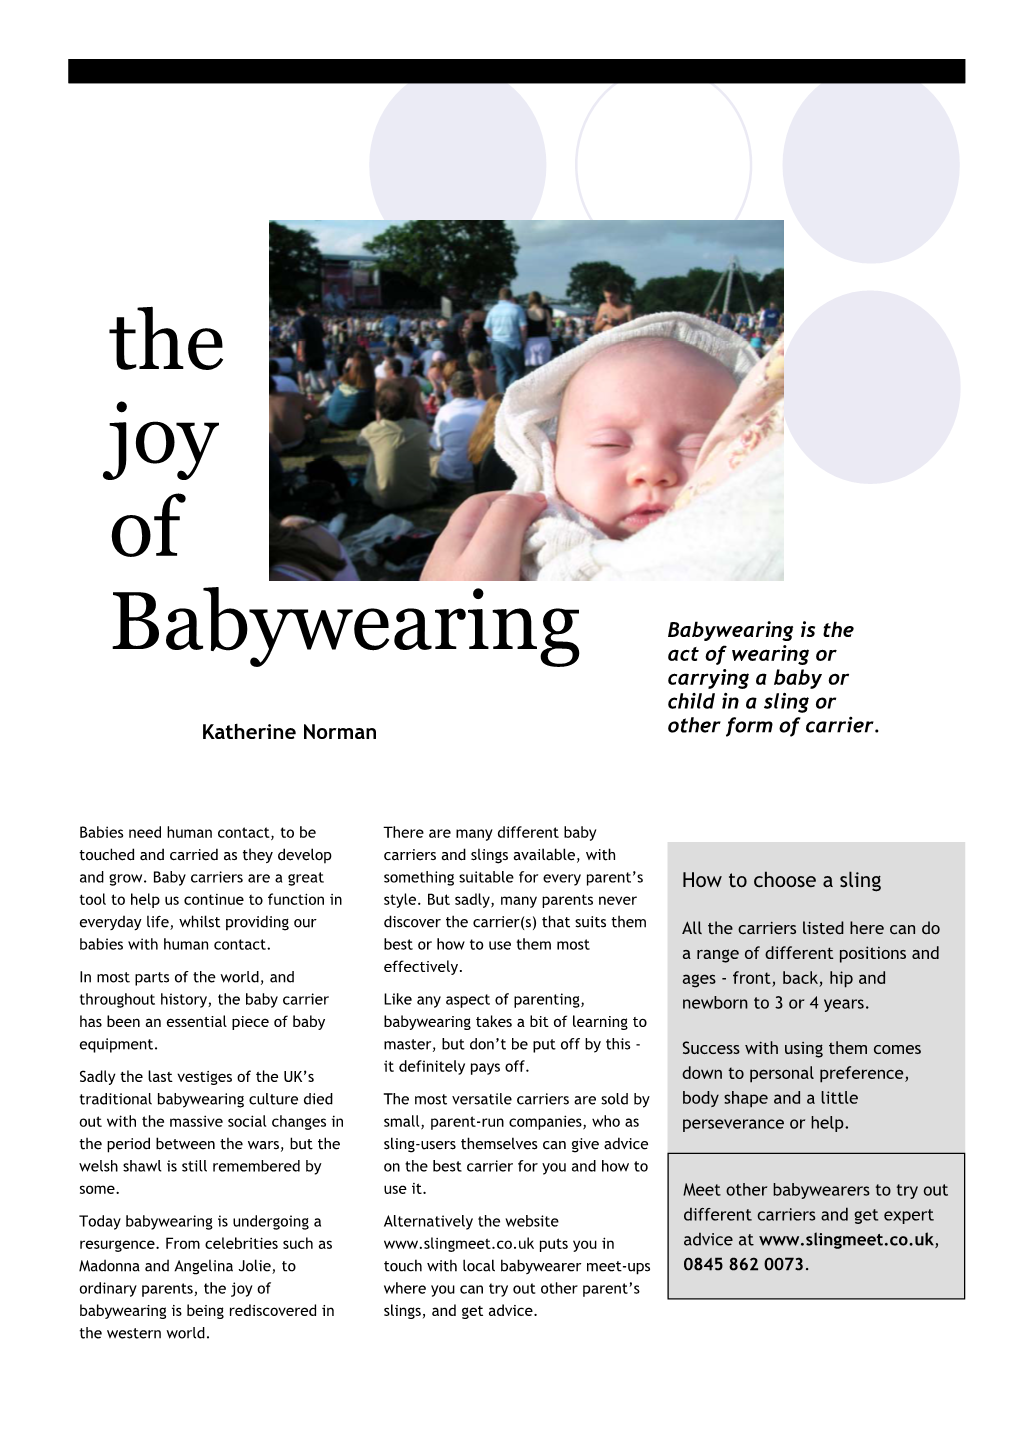 The Joy of Babywearing